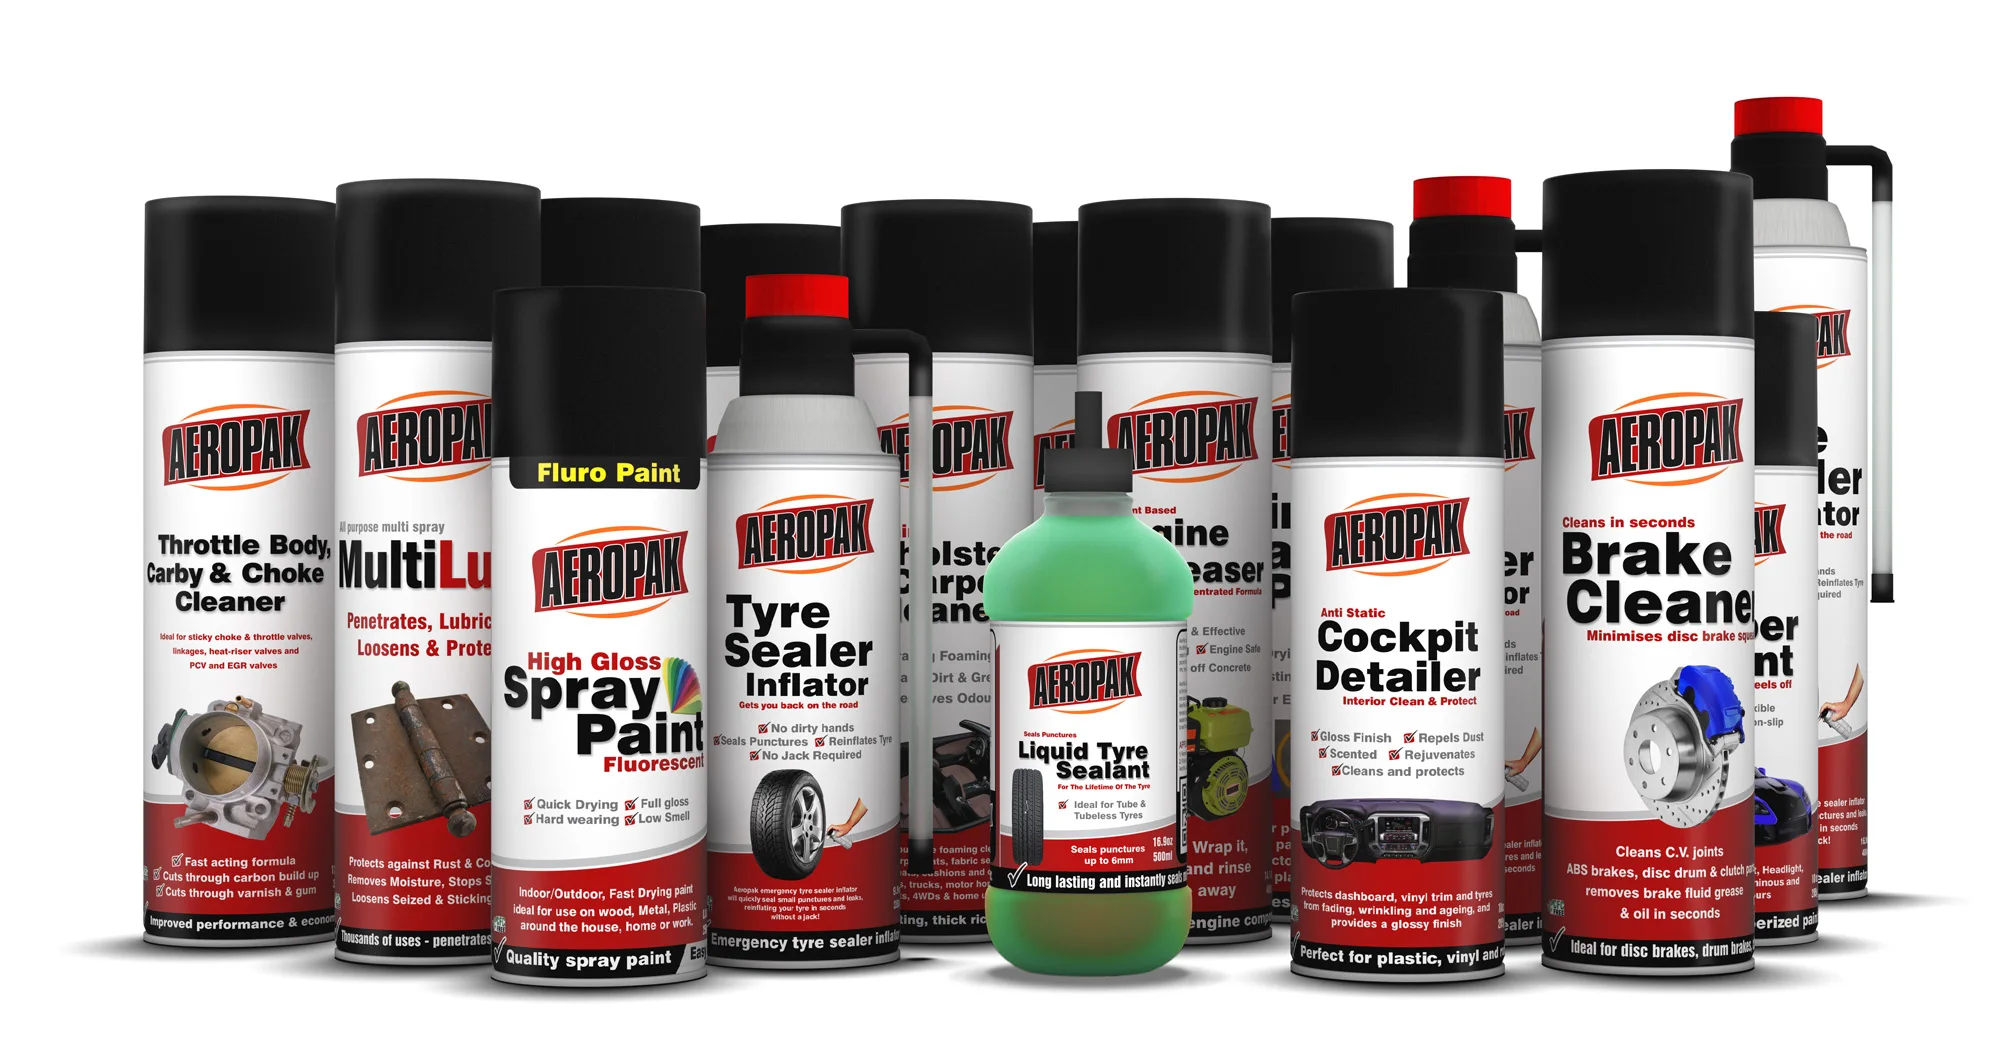 AEROPAK Long Lasting Copper Grease Lubricating Spray